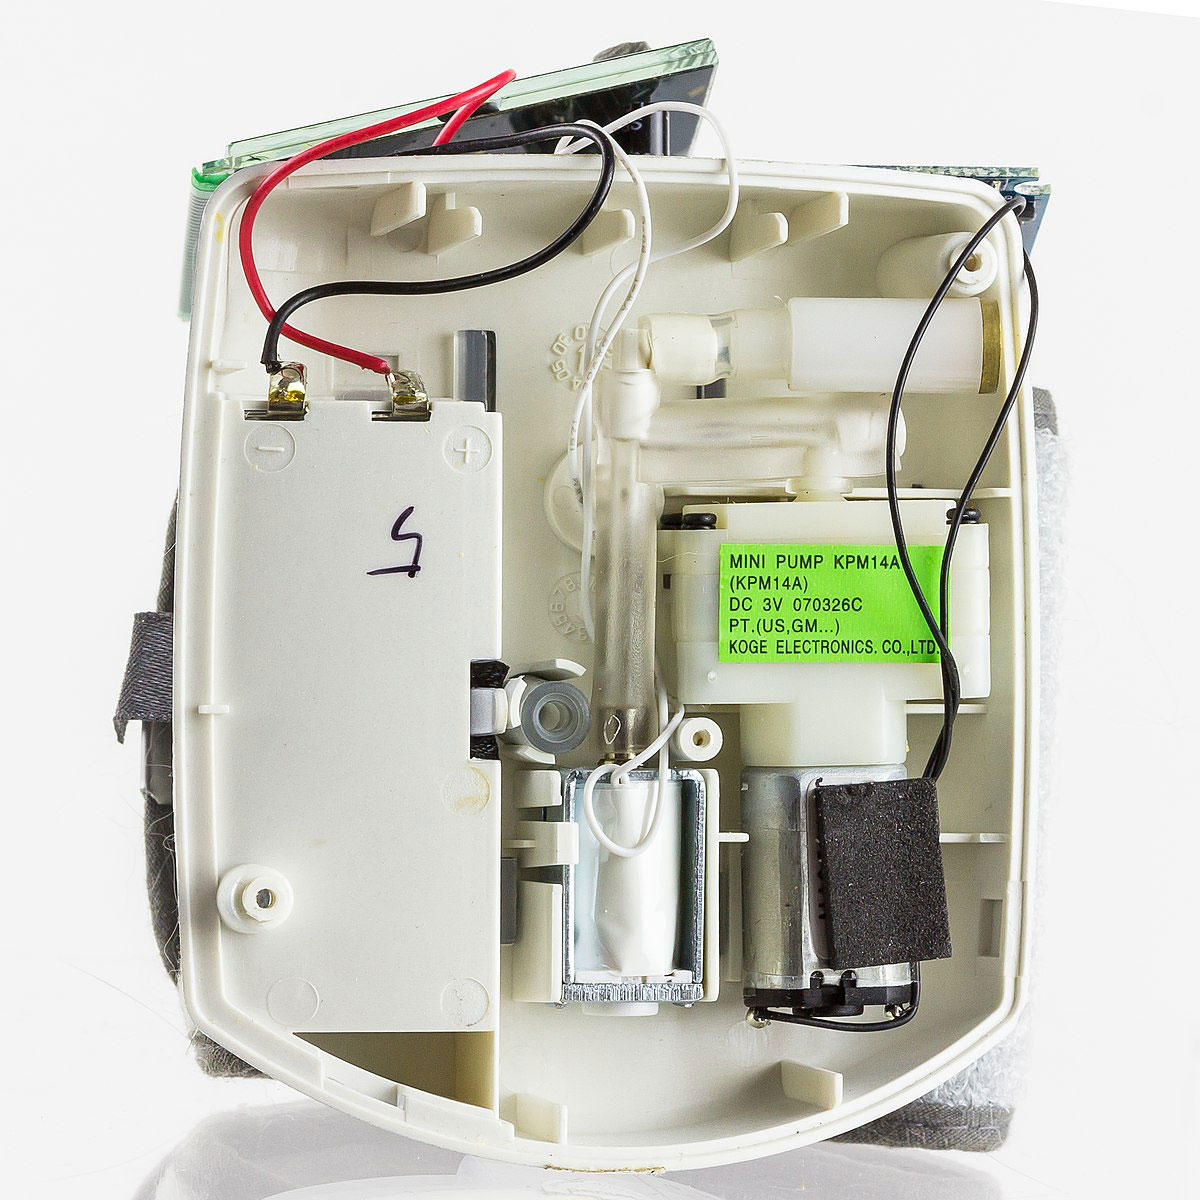 A mini pump in a wrist BP monitor